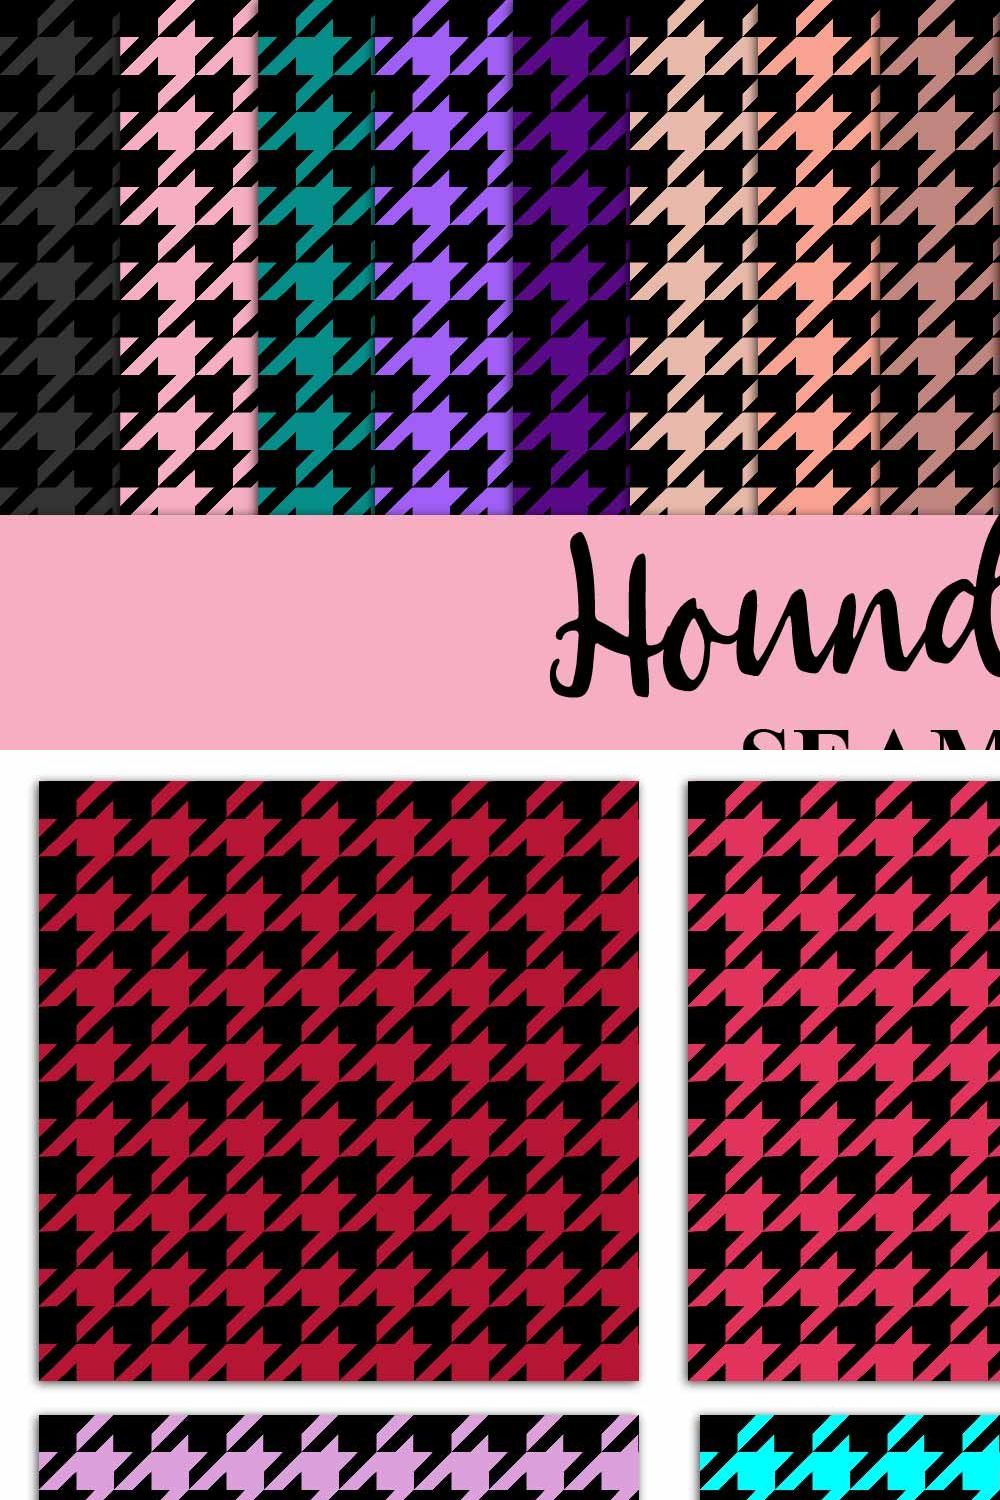 Houndstooth Seamless Pattern Svg - Houndstooth Digital paper